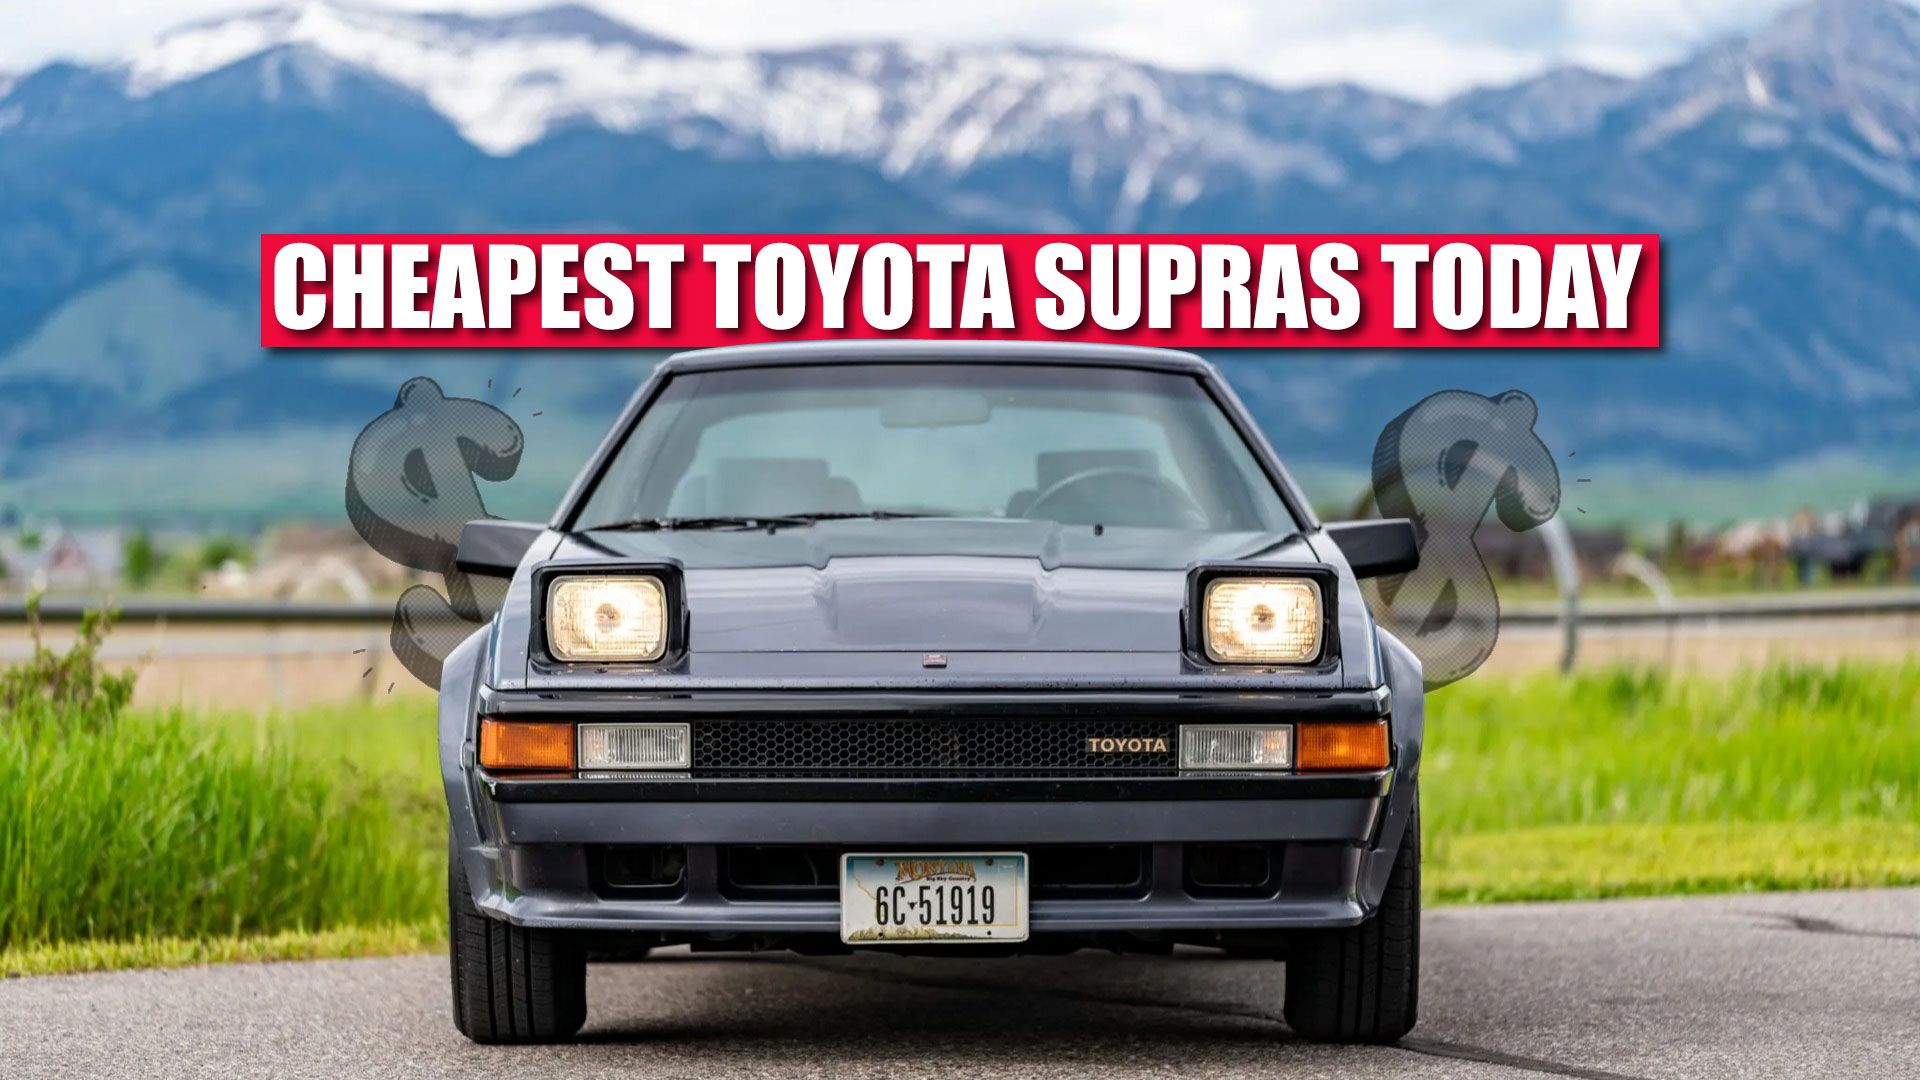 Toyota Celica Supra front shot